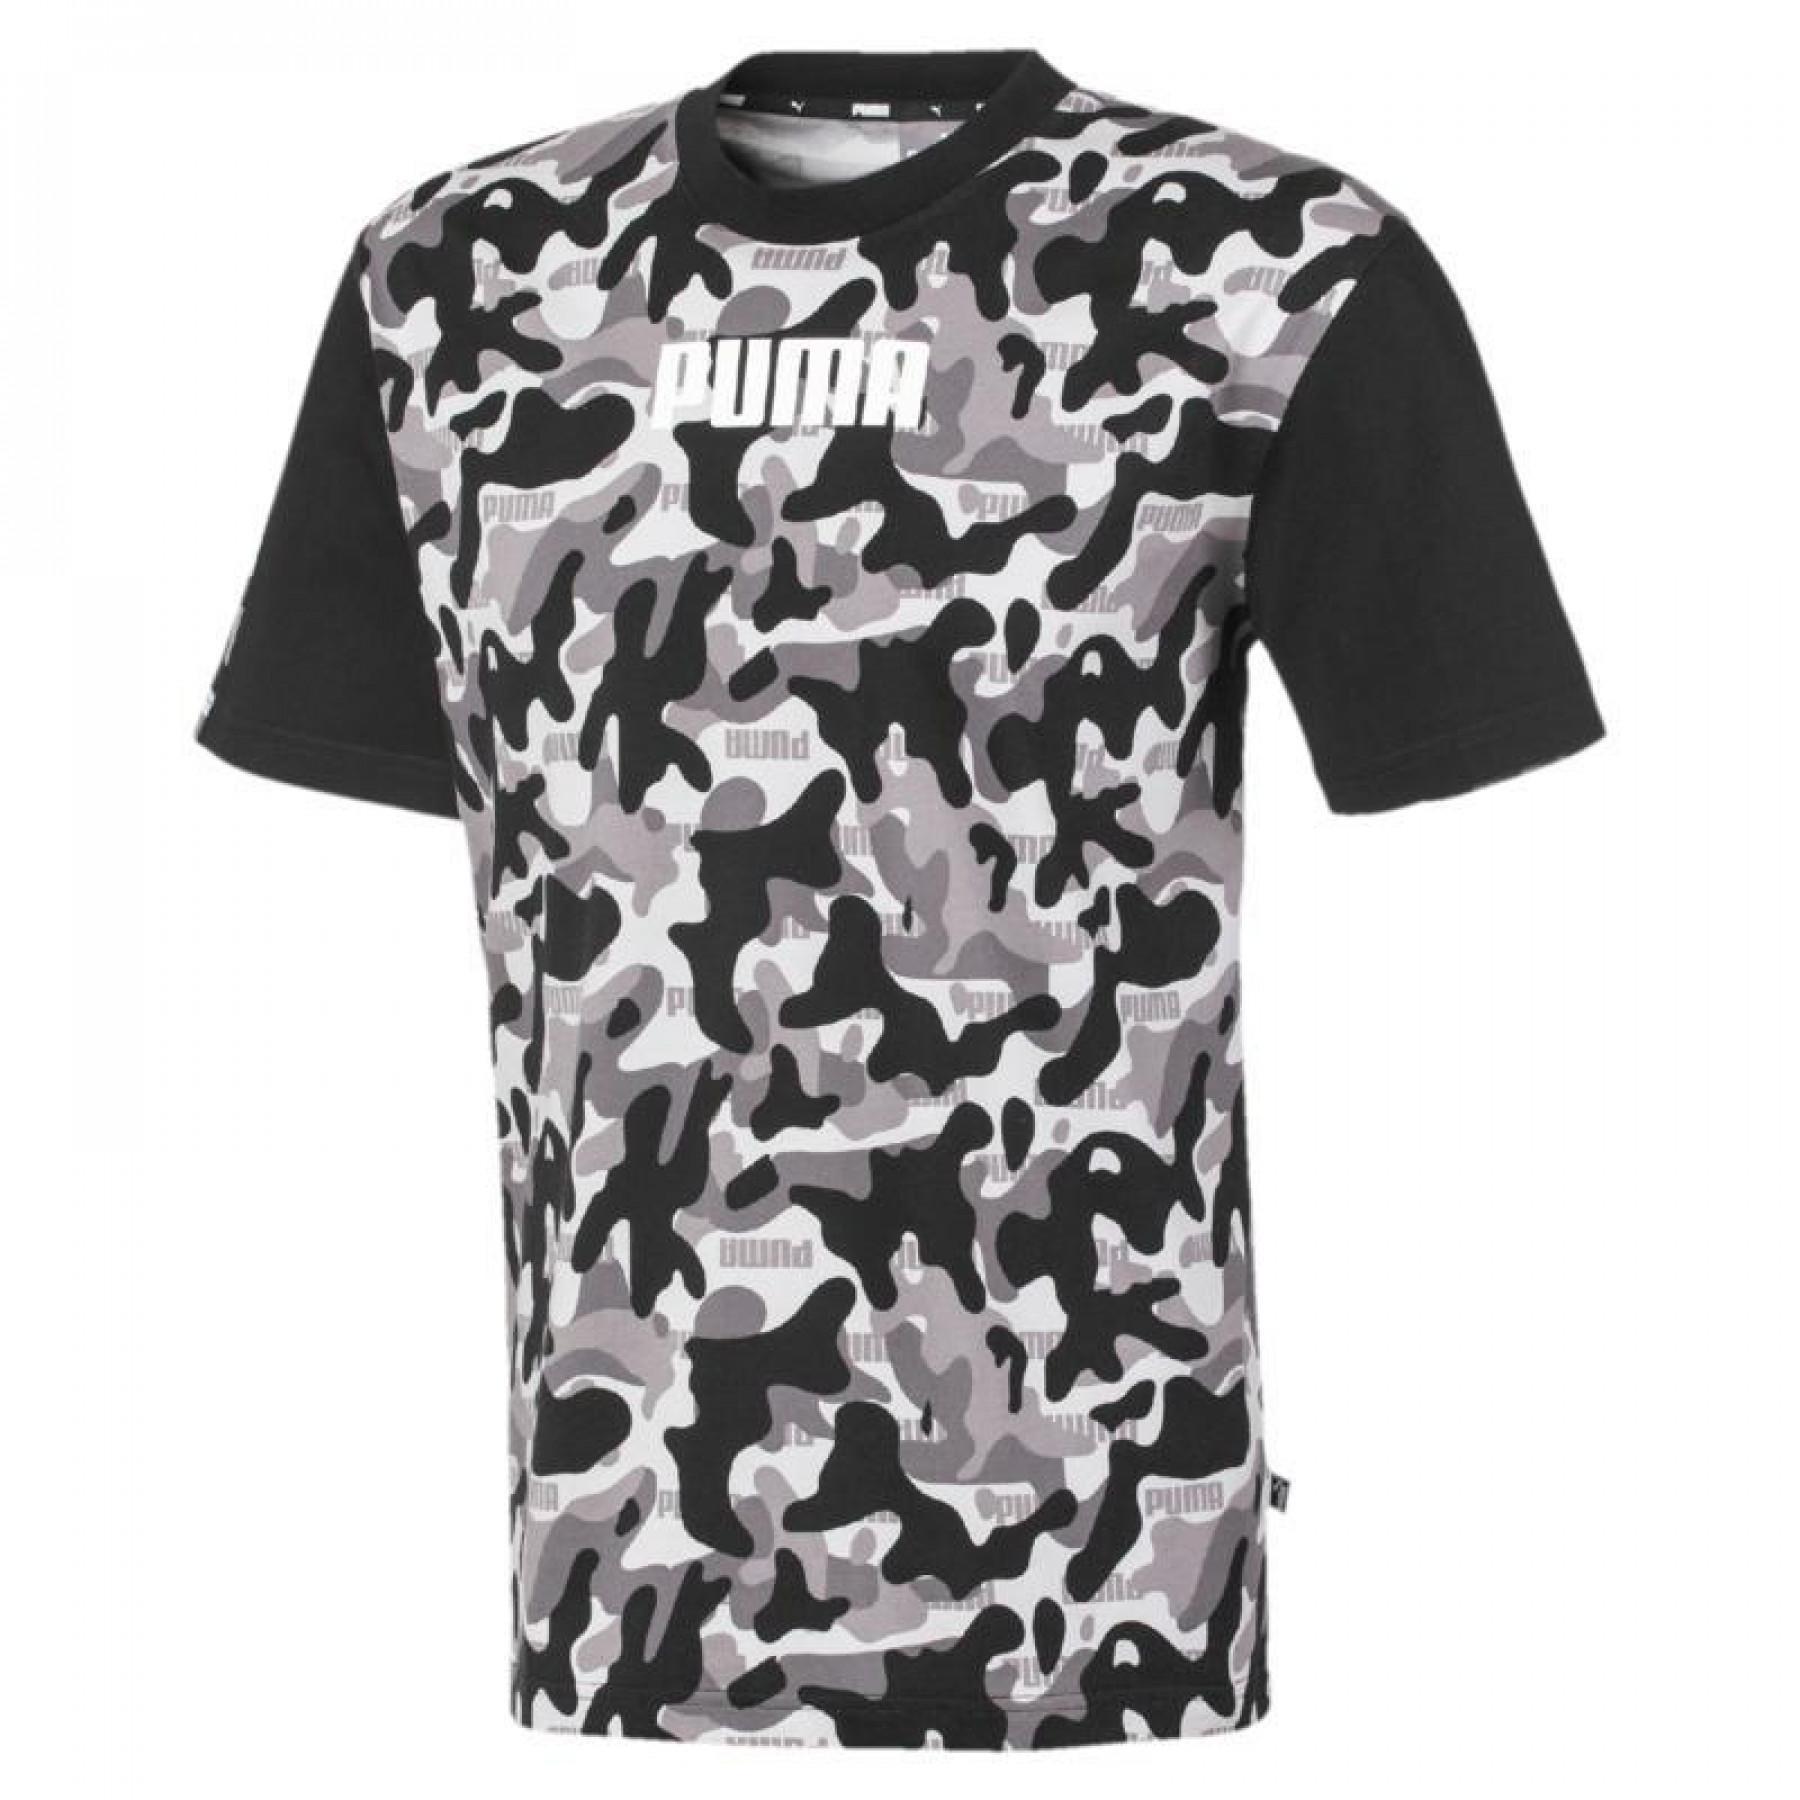 Koszulka Puma camouflage